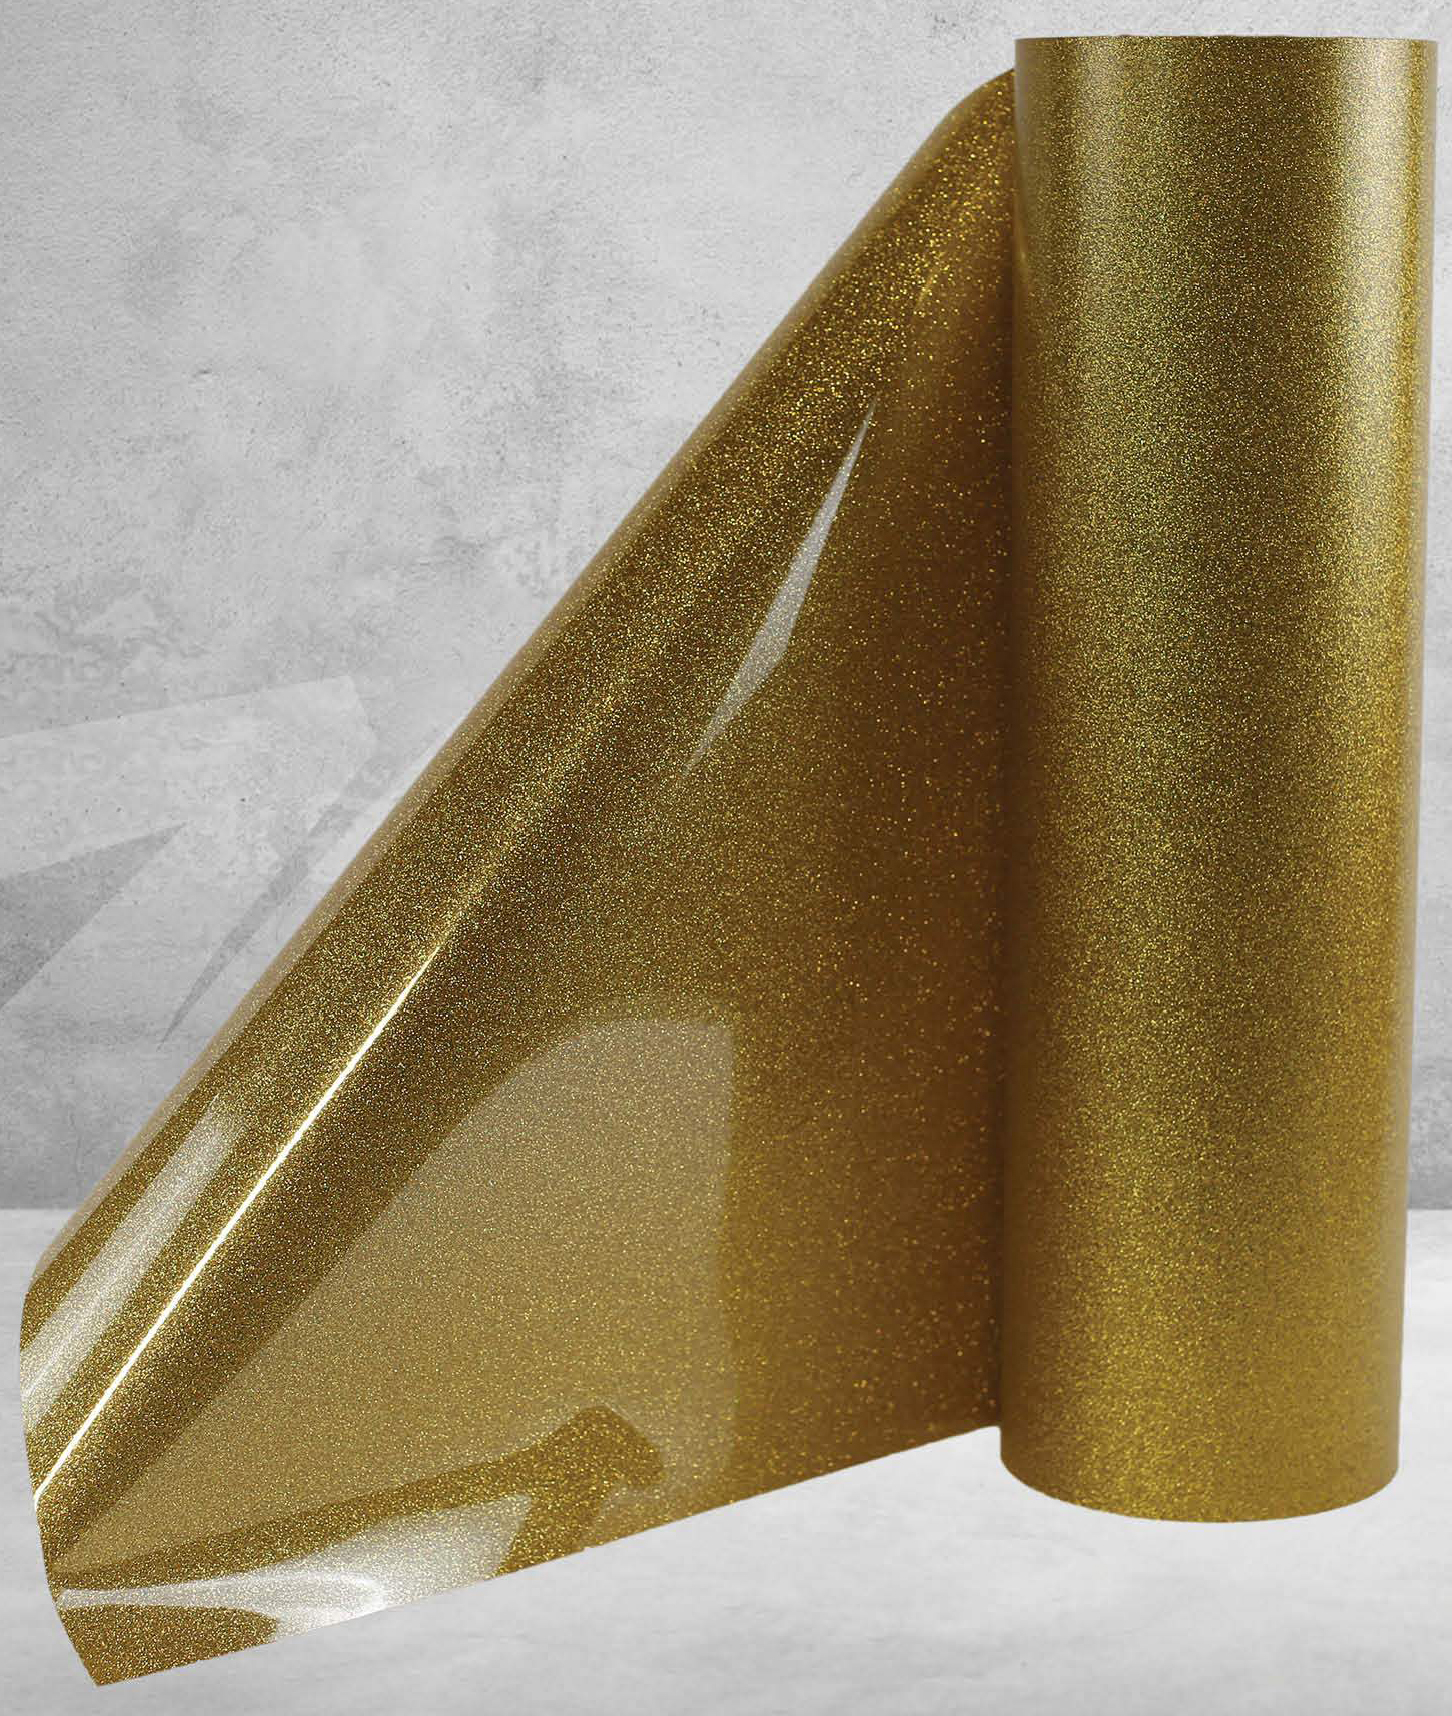 GlitterFlexULTRA Gold - Specialty Materials GlitterFlex Ultra Heat Transfer Film